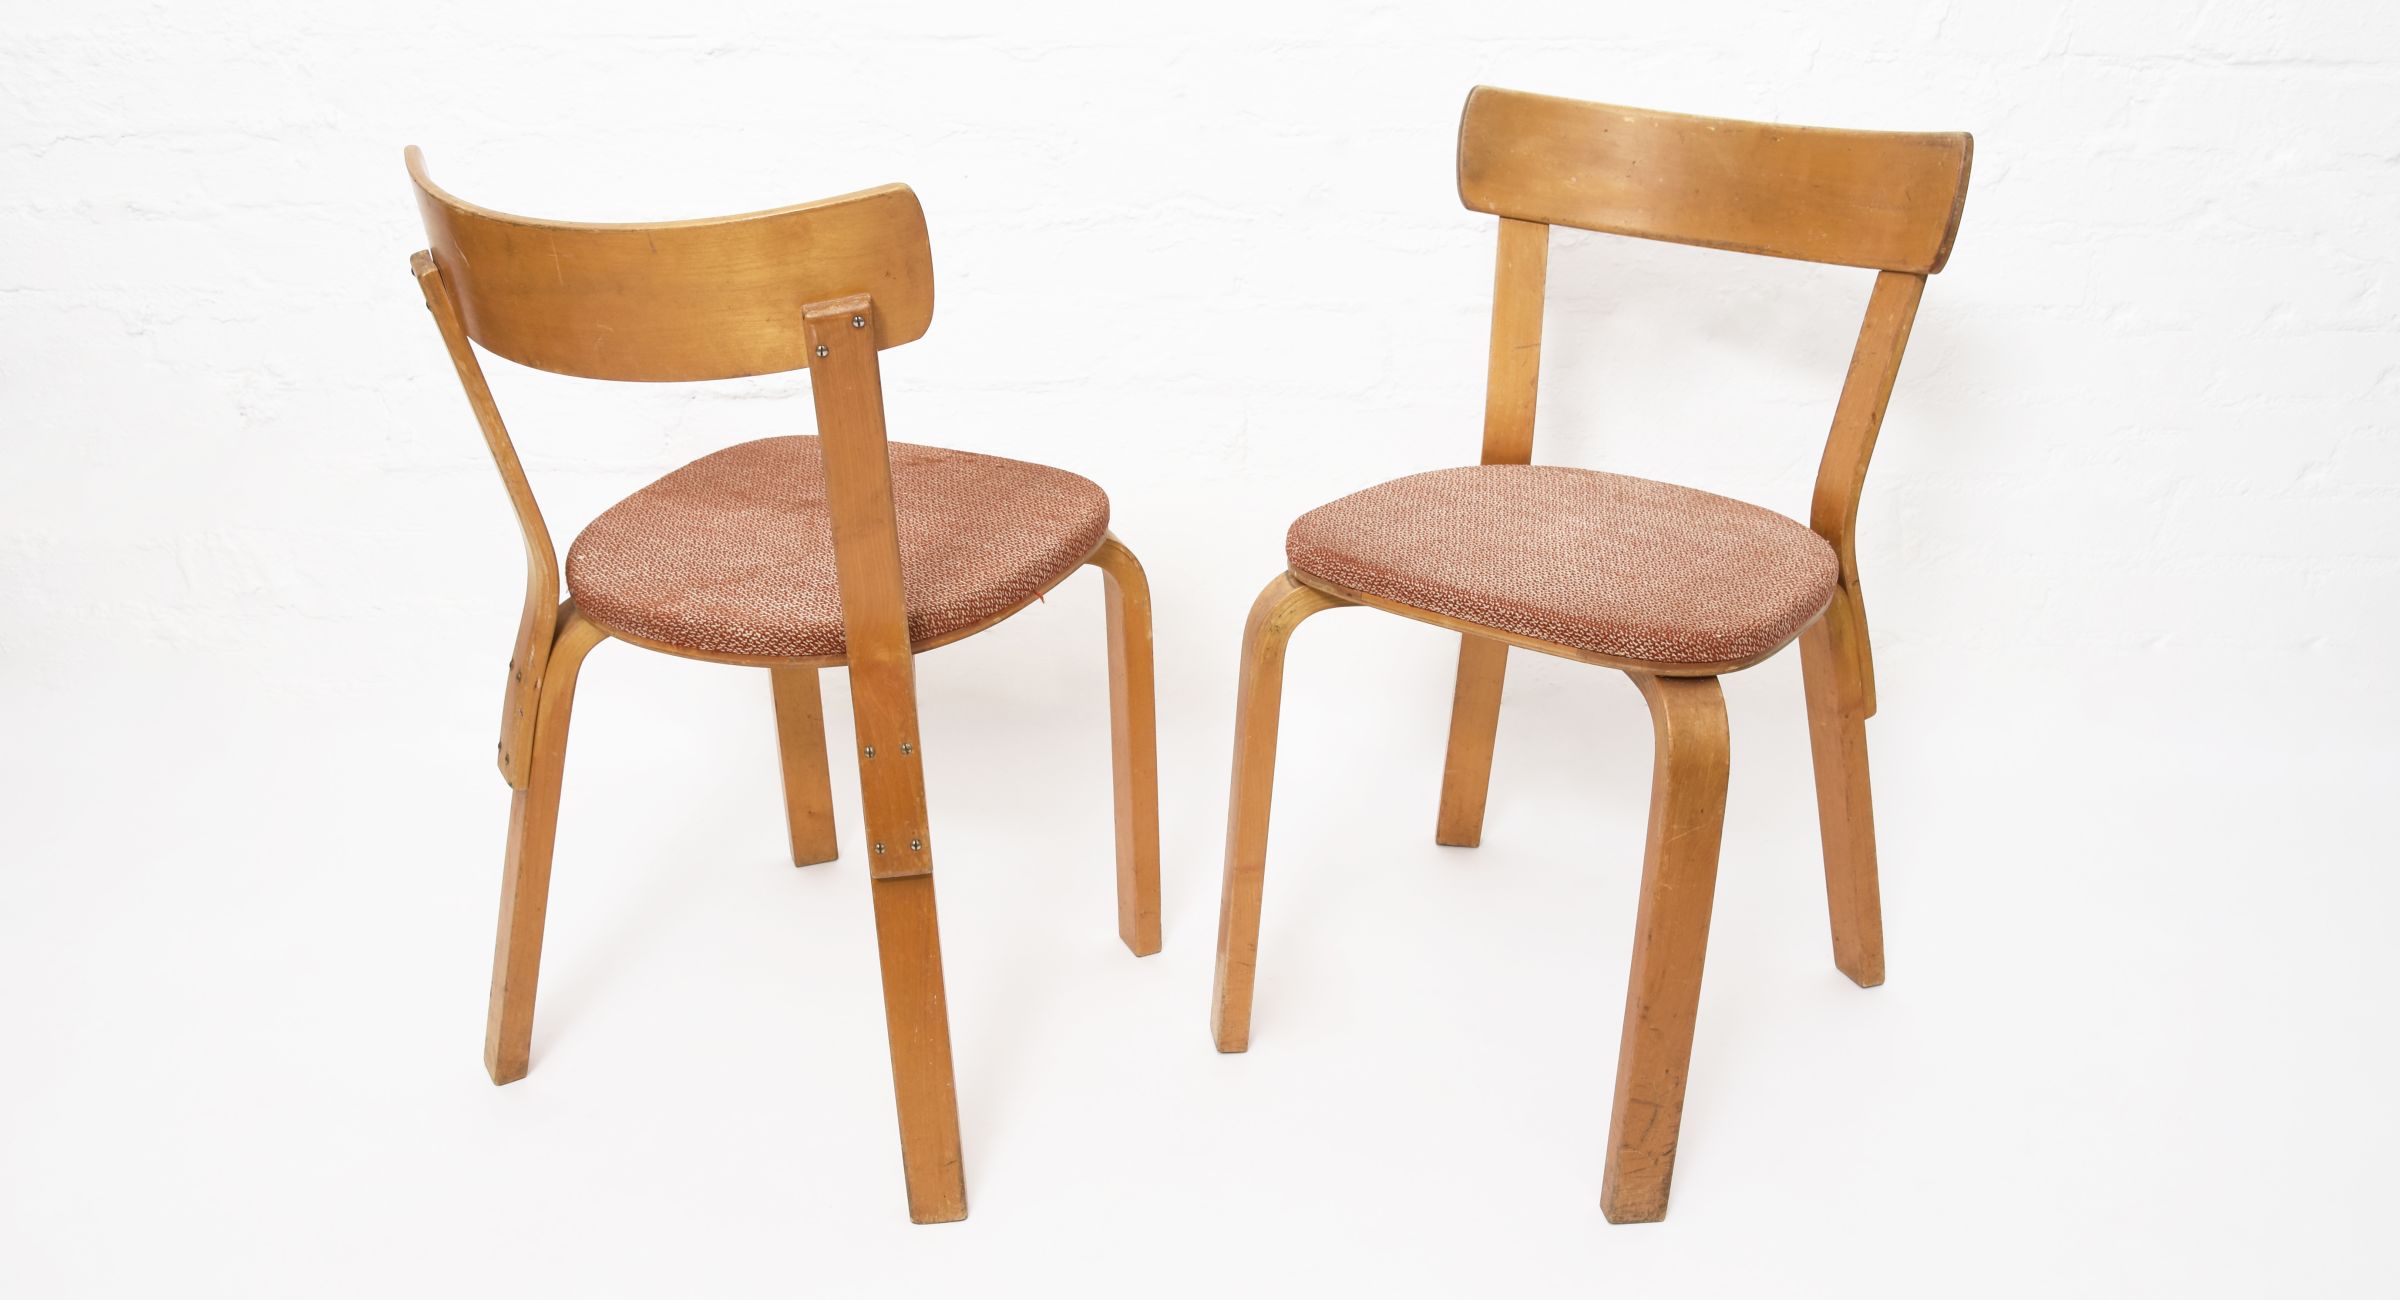 Artek - Chair 69 with Sandwitch Seat and Original Artek Fabric